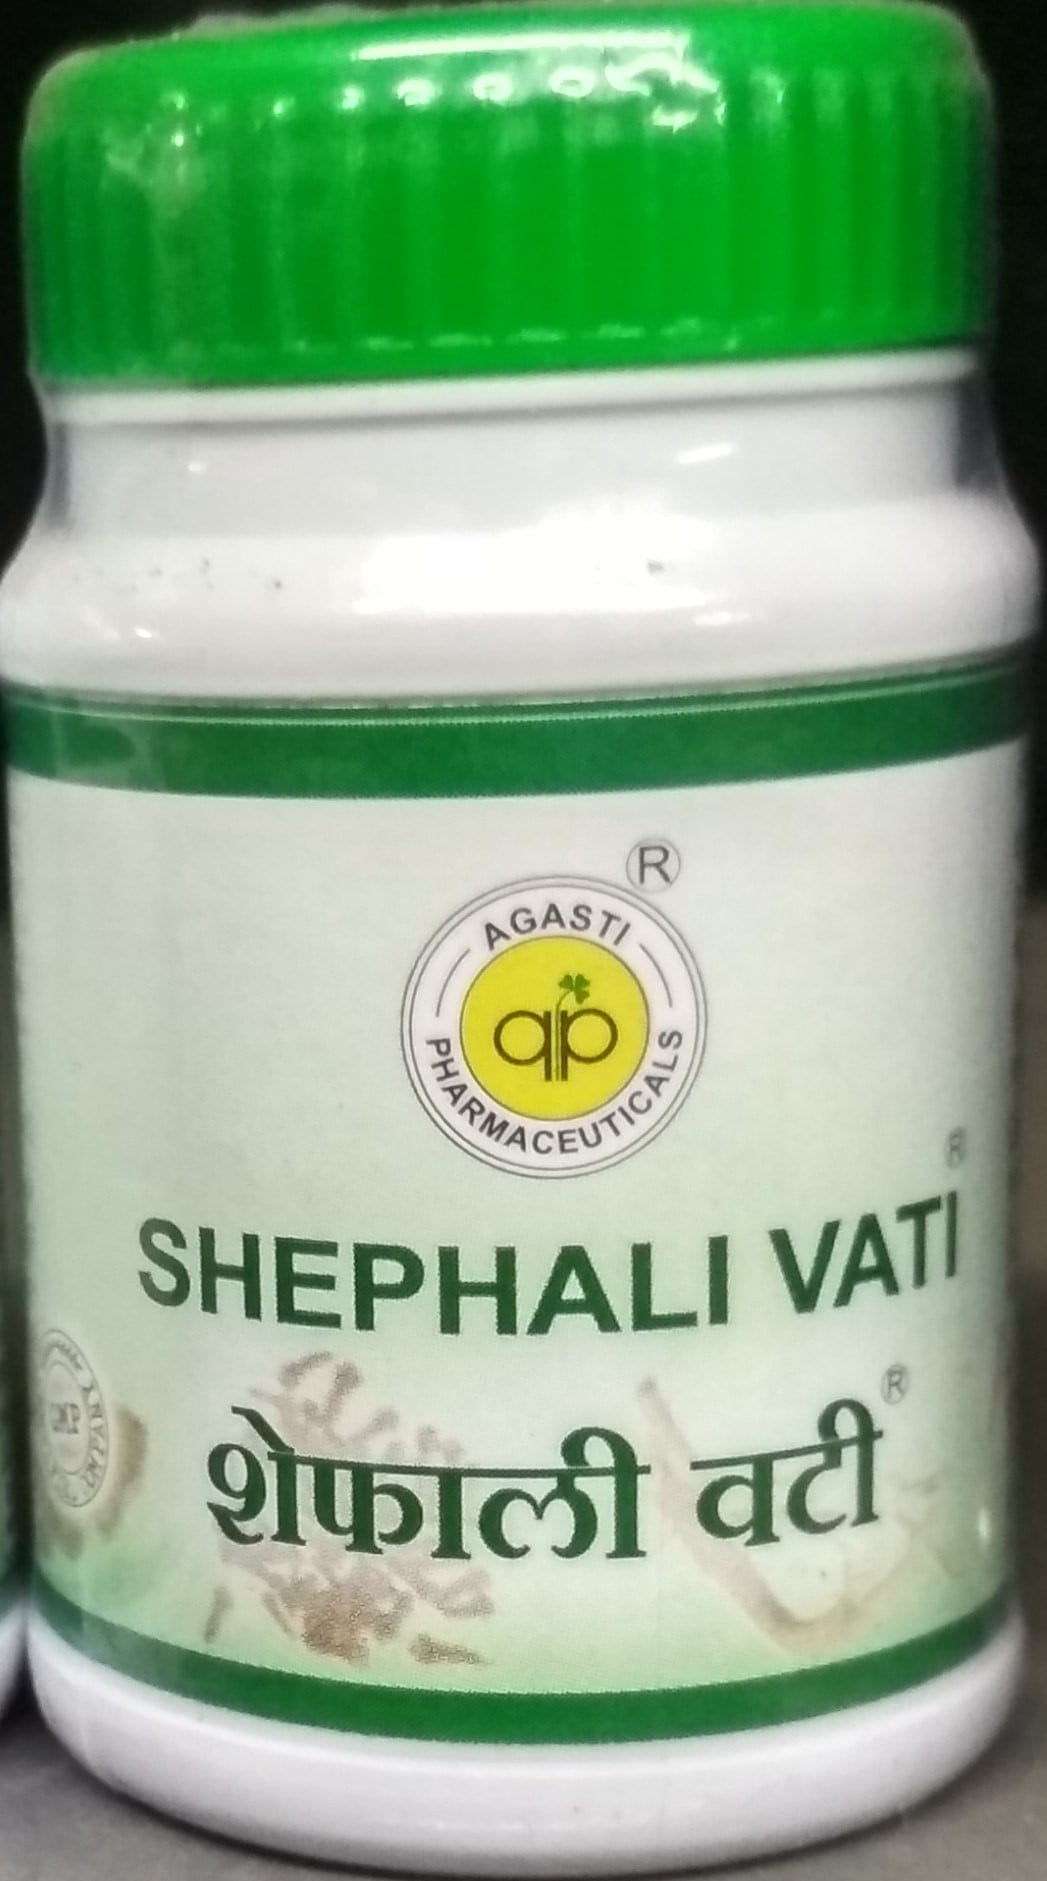 shephali vati 500 gm 1000 tablet upto 15% off agasti pharmaceuticals